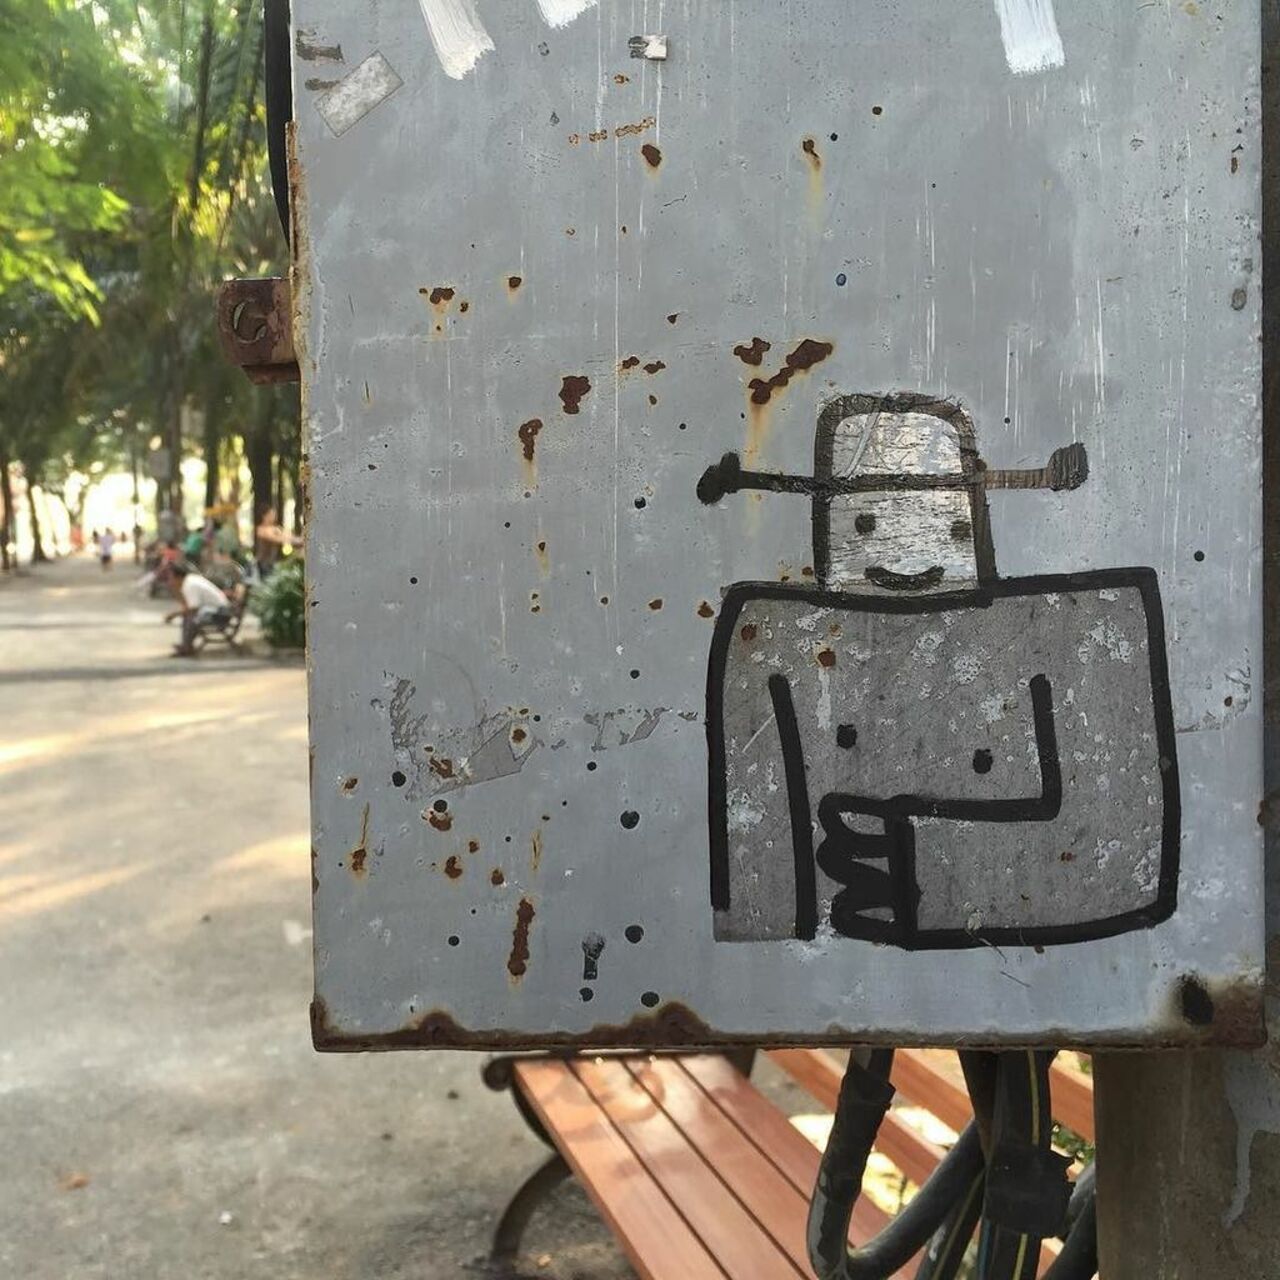 #streetart #graff #graffiti #HCMC #helloVietnam http://ift.tt/1WbDU84 https://t.co/KNMc7CZ7gJ